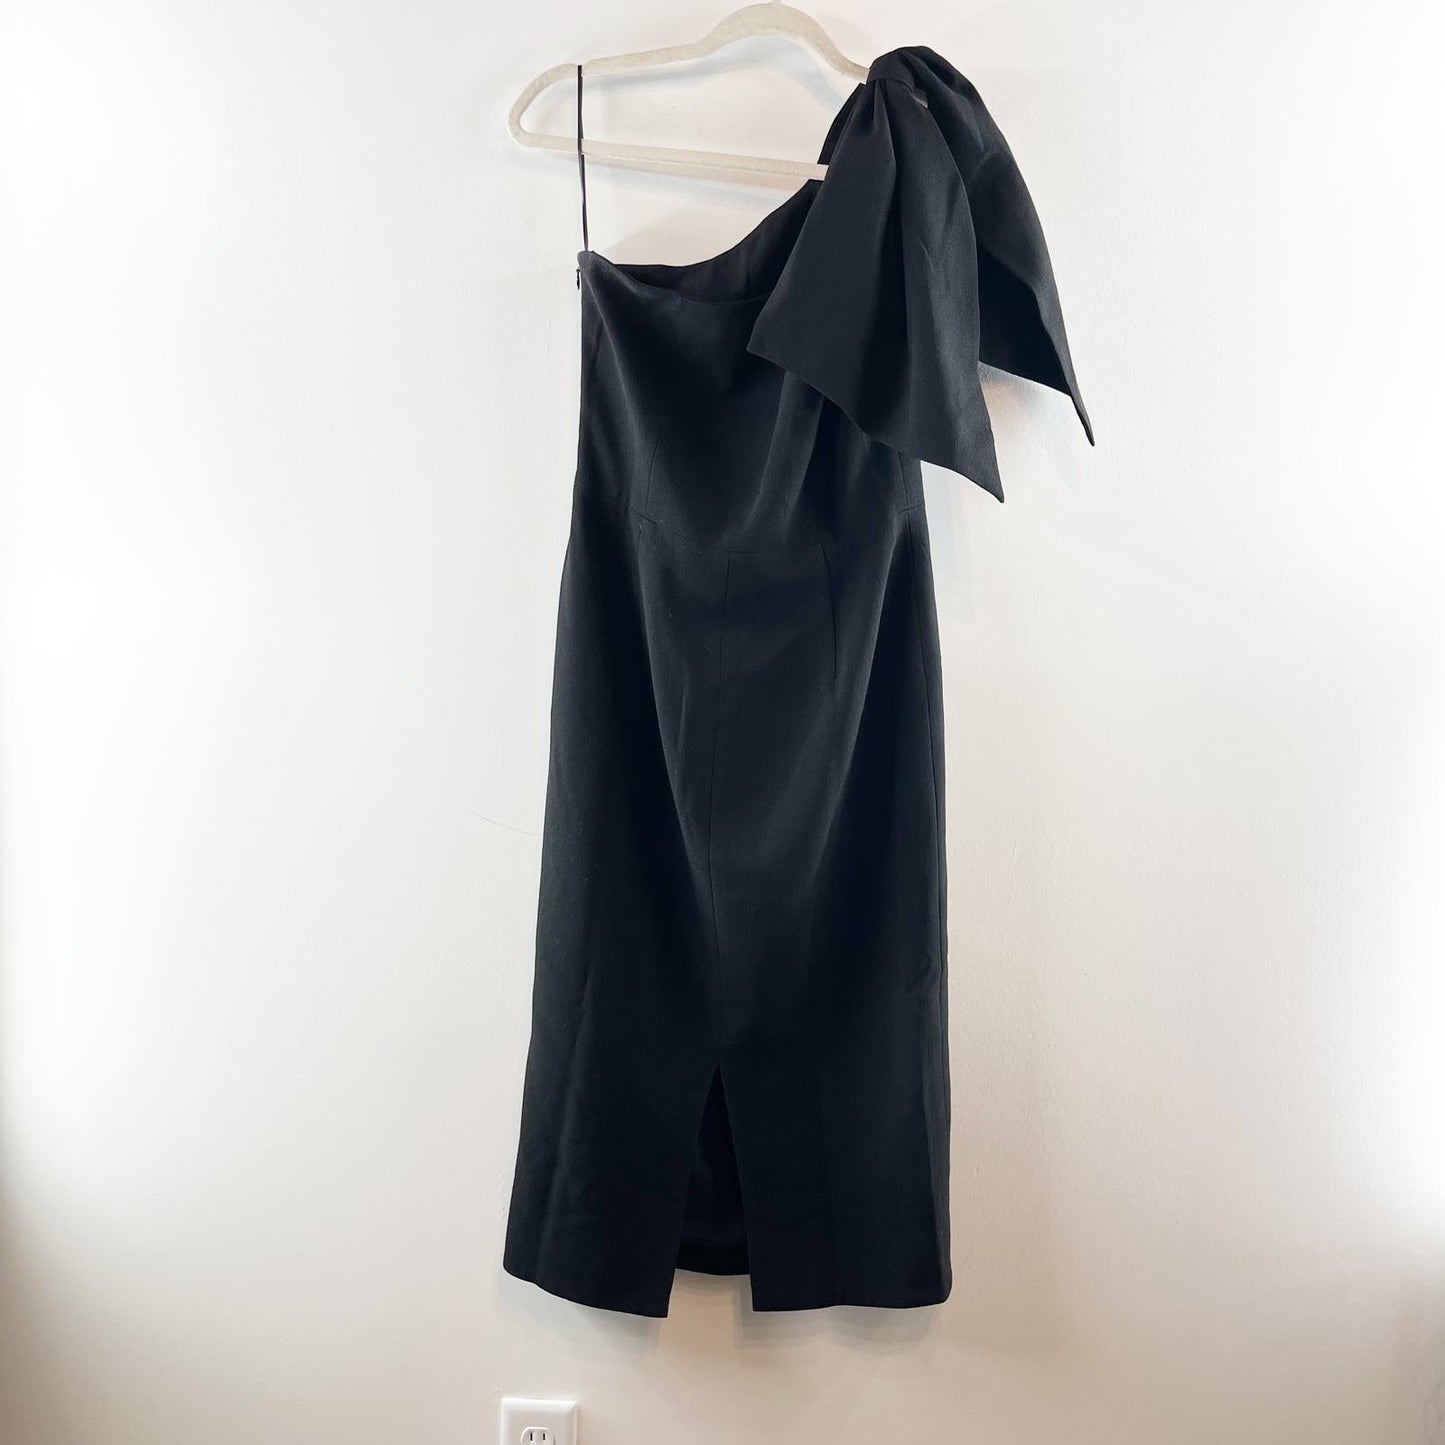 Dress The Population One Shoulder Tiffany Bow Midi Dress Black Medium